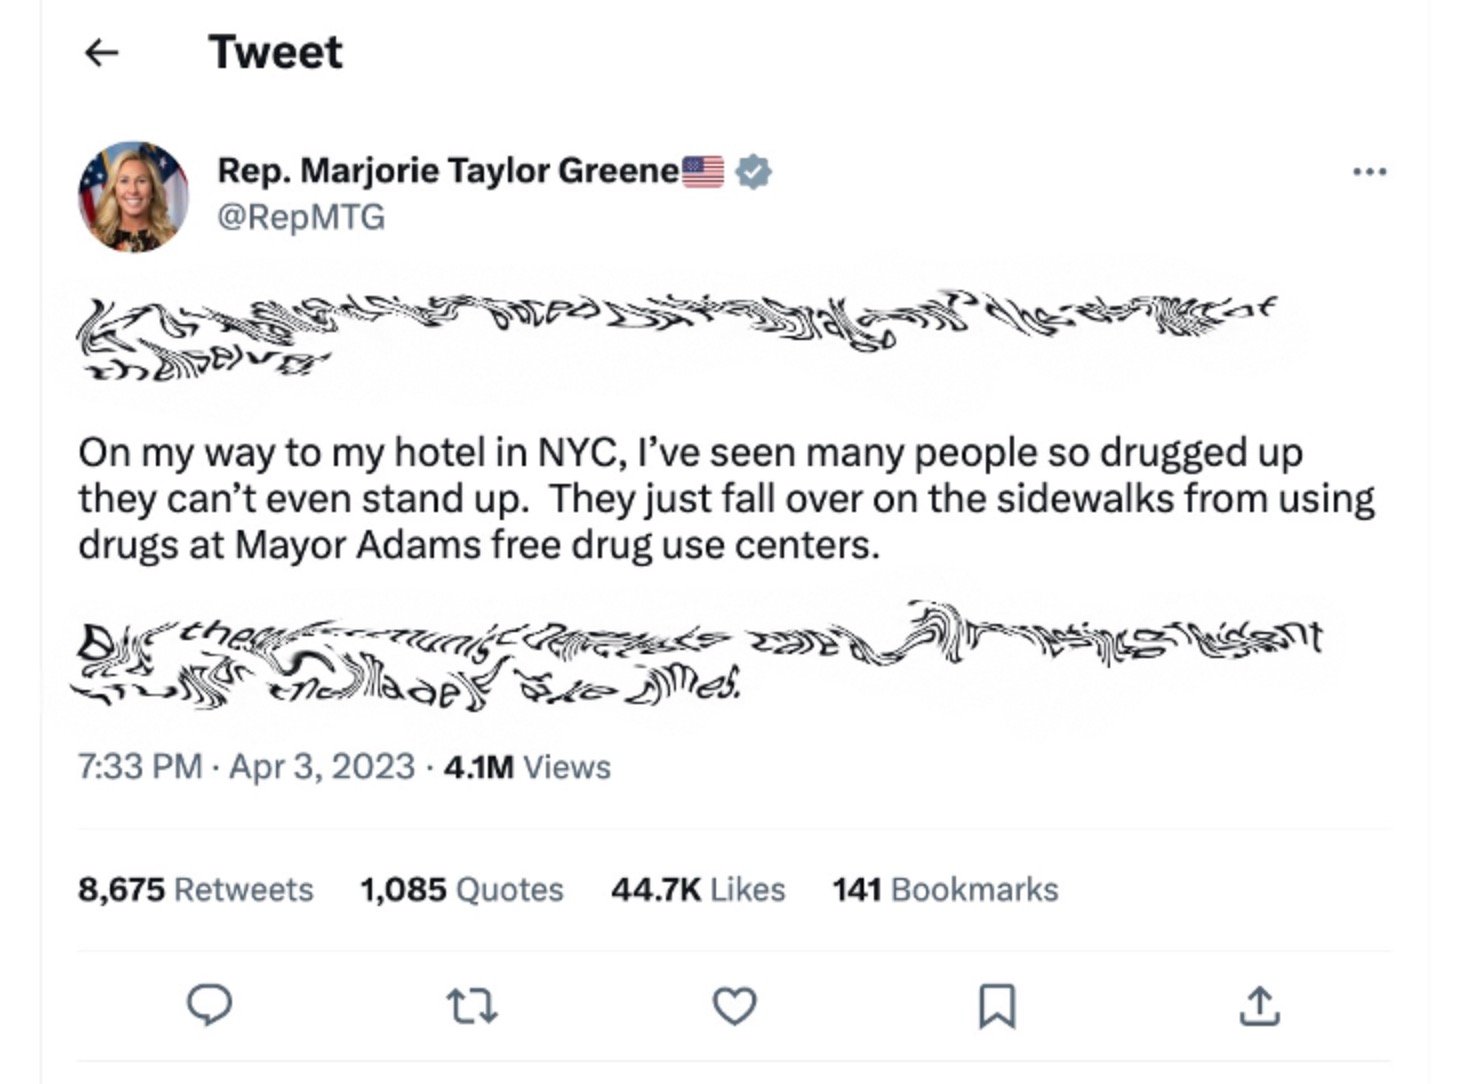 Marjorie Taylor Greene References Harlem’s OnPoint in Tweet